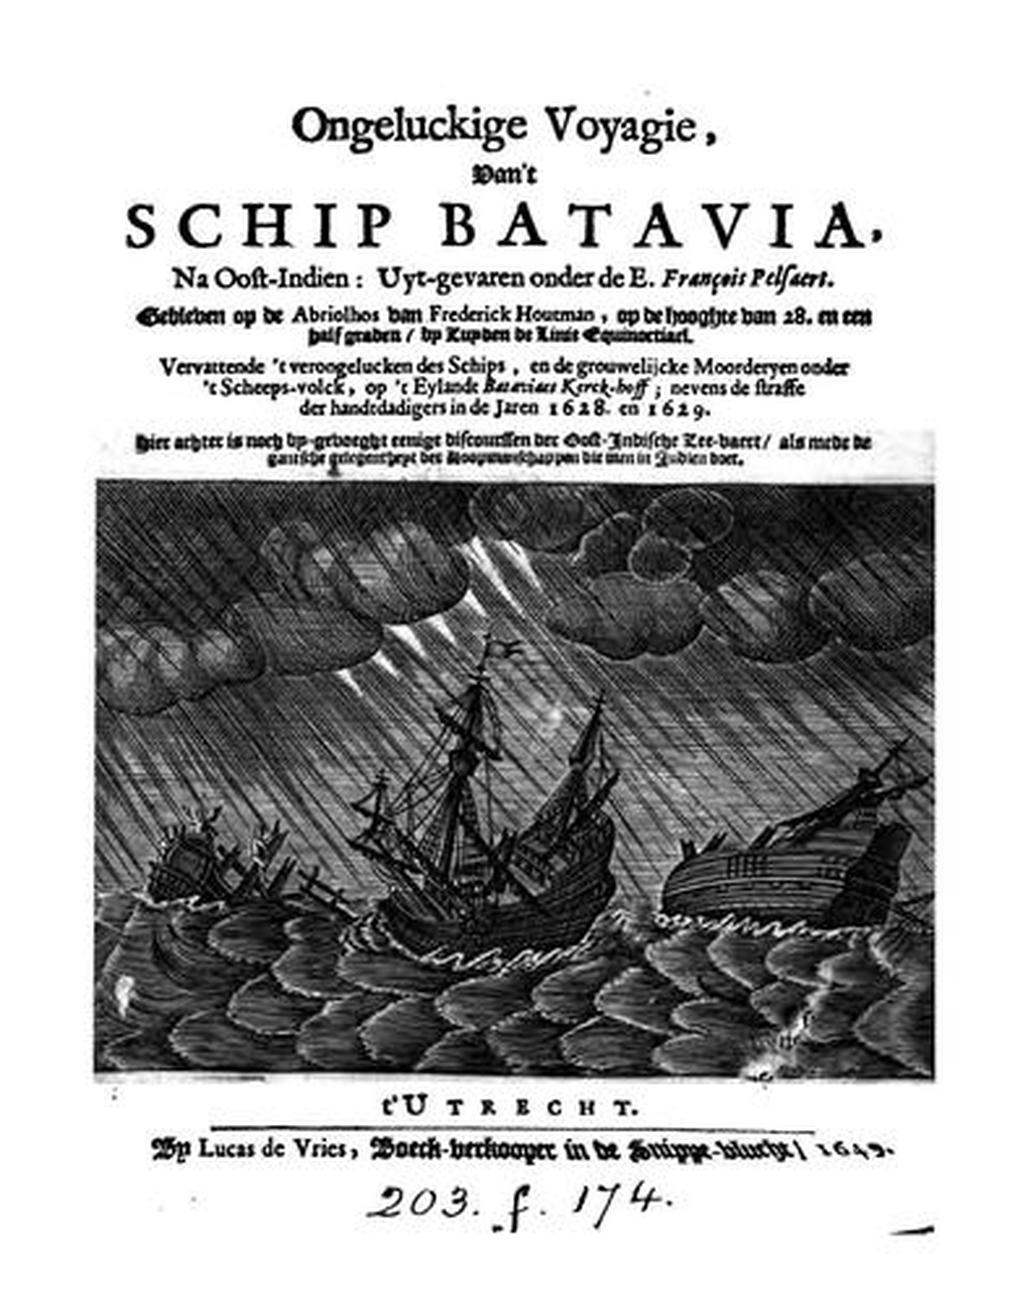 Batavia - Le BATAVIA, reconstitution d'un navire de la V.O.C. (1629) 17072802263023134915175989